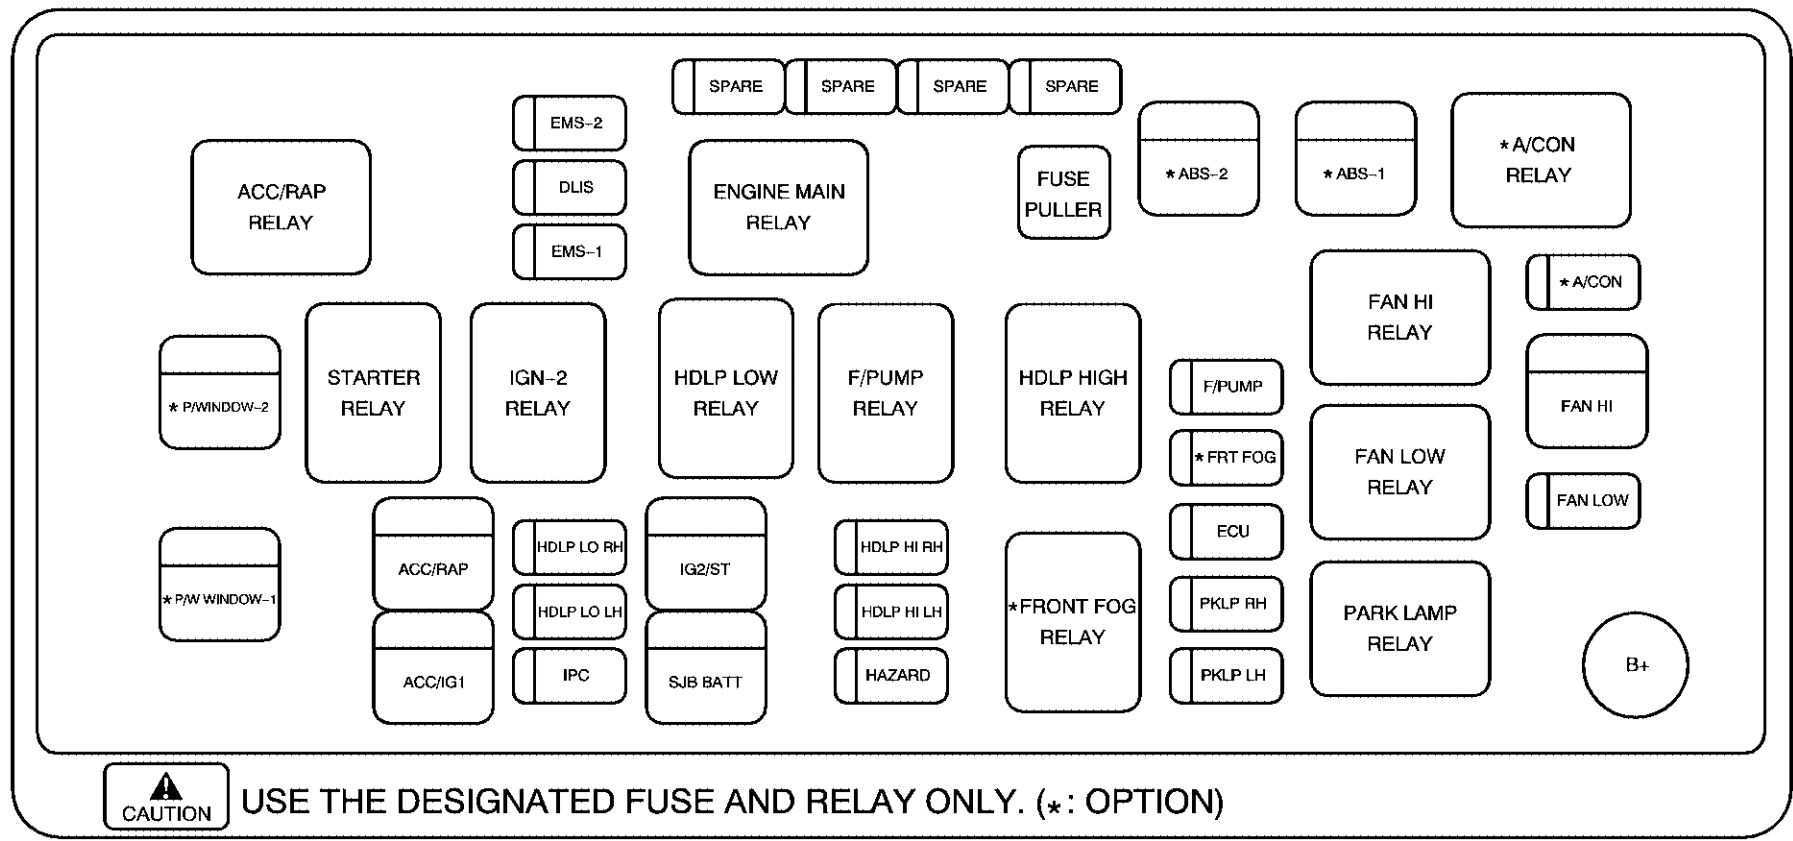 2009 Chevy Aveo Fuse Box Wiring Diagram General Helper